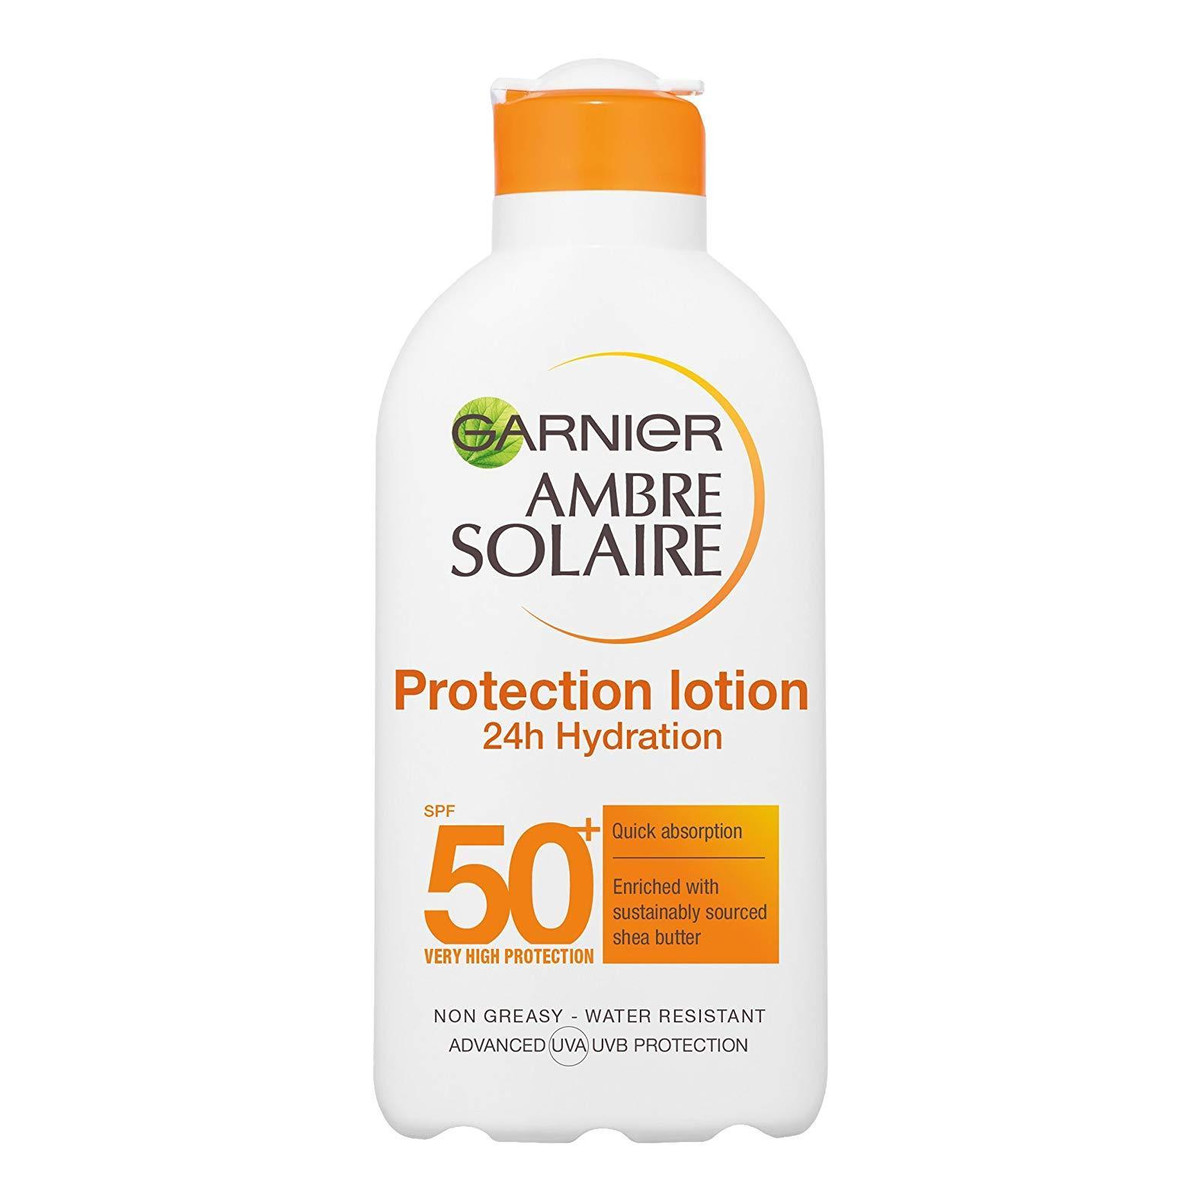 Garnier Ambre Solaire Protection Lotion nawilżający balsam do opalania SPF 50 200ml